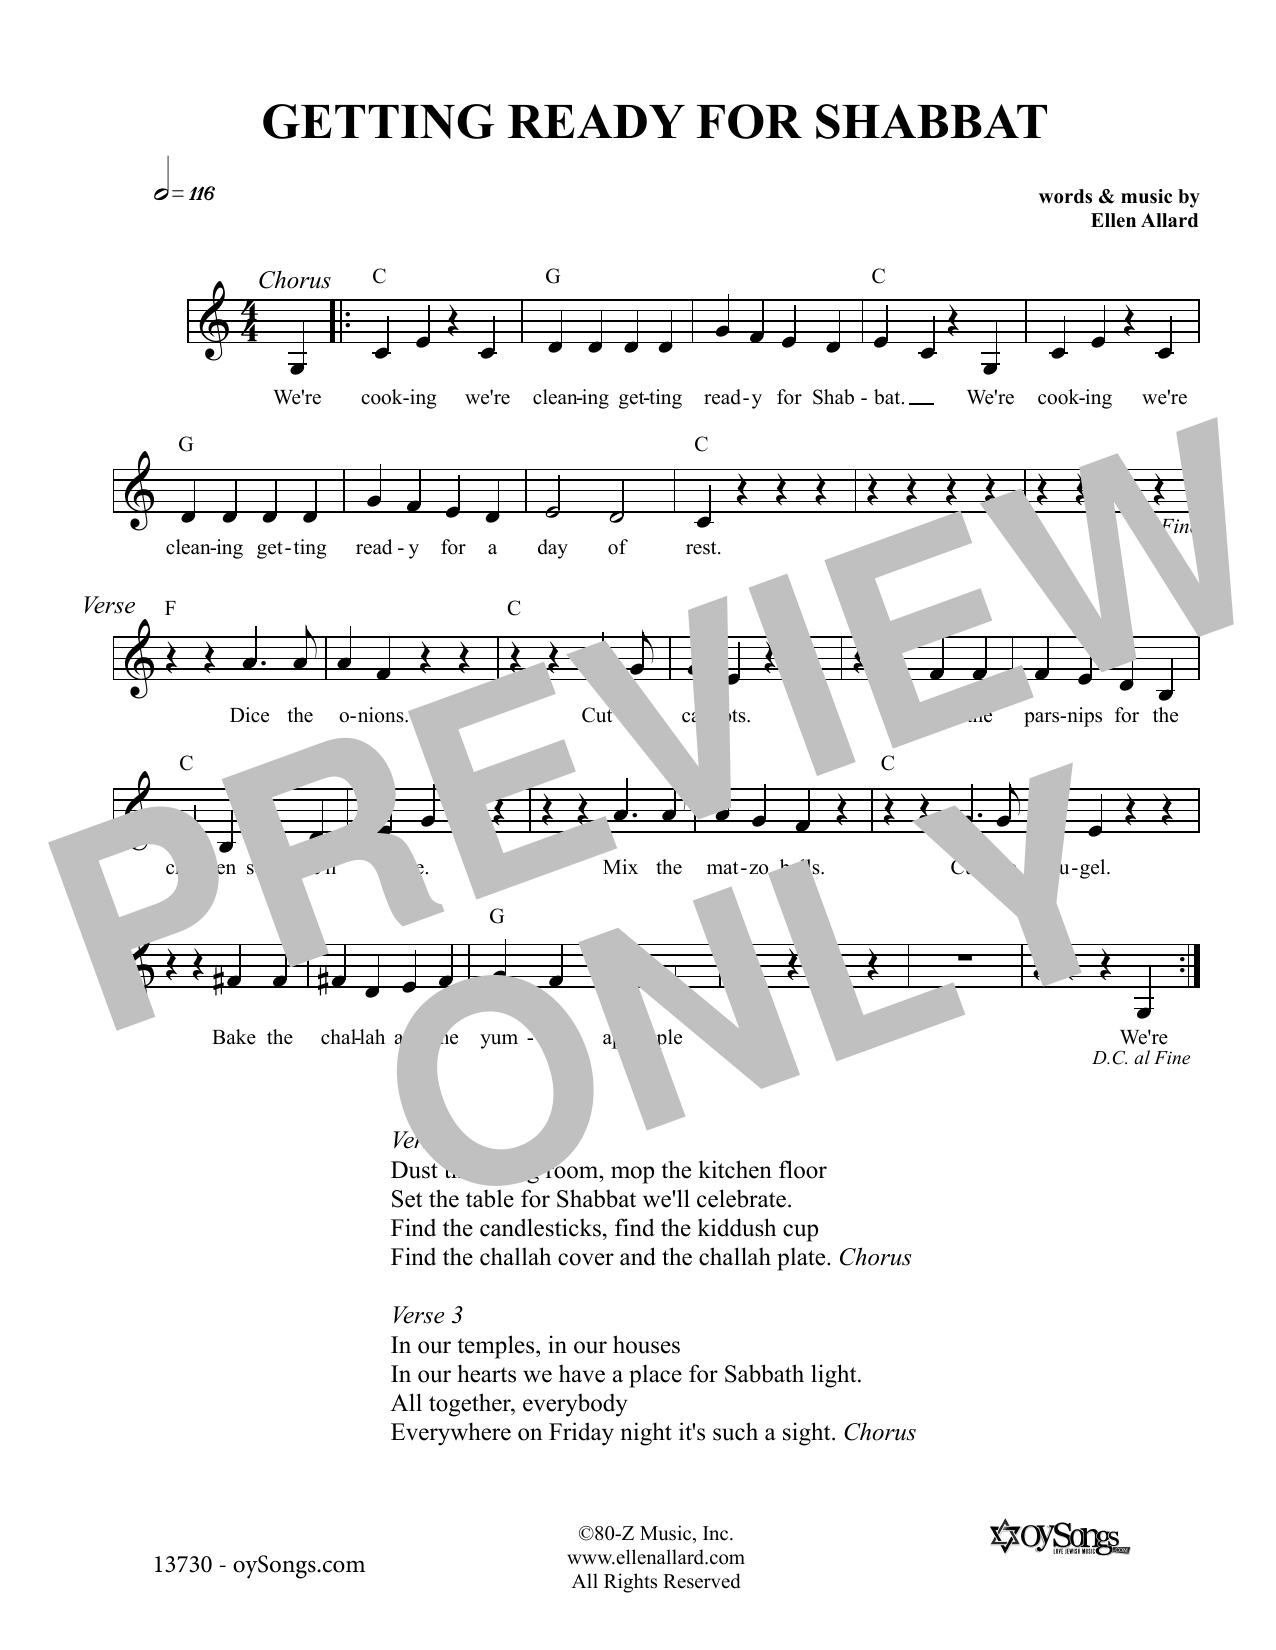 Ellen Allard Getting Ready For Shabbat Sheet Music Notes & Chords for Melody Line, Lyrics & Chords - Download or Print PDF